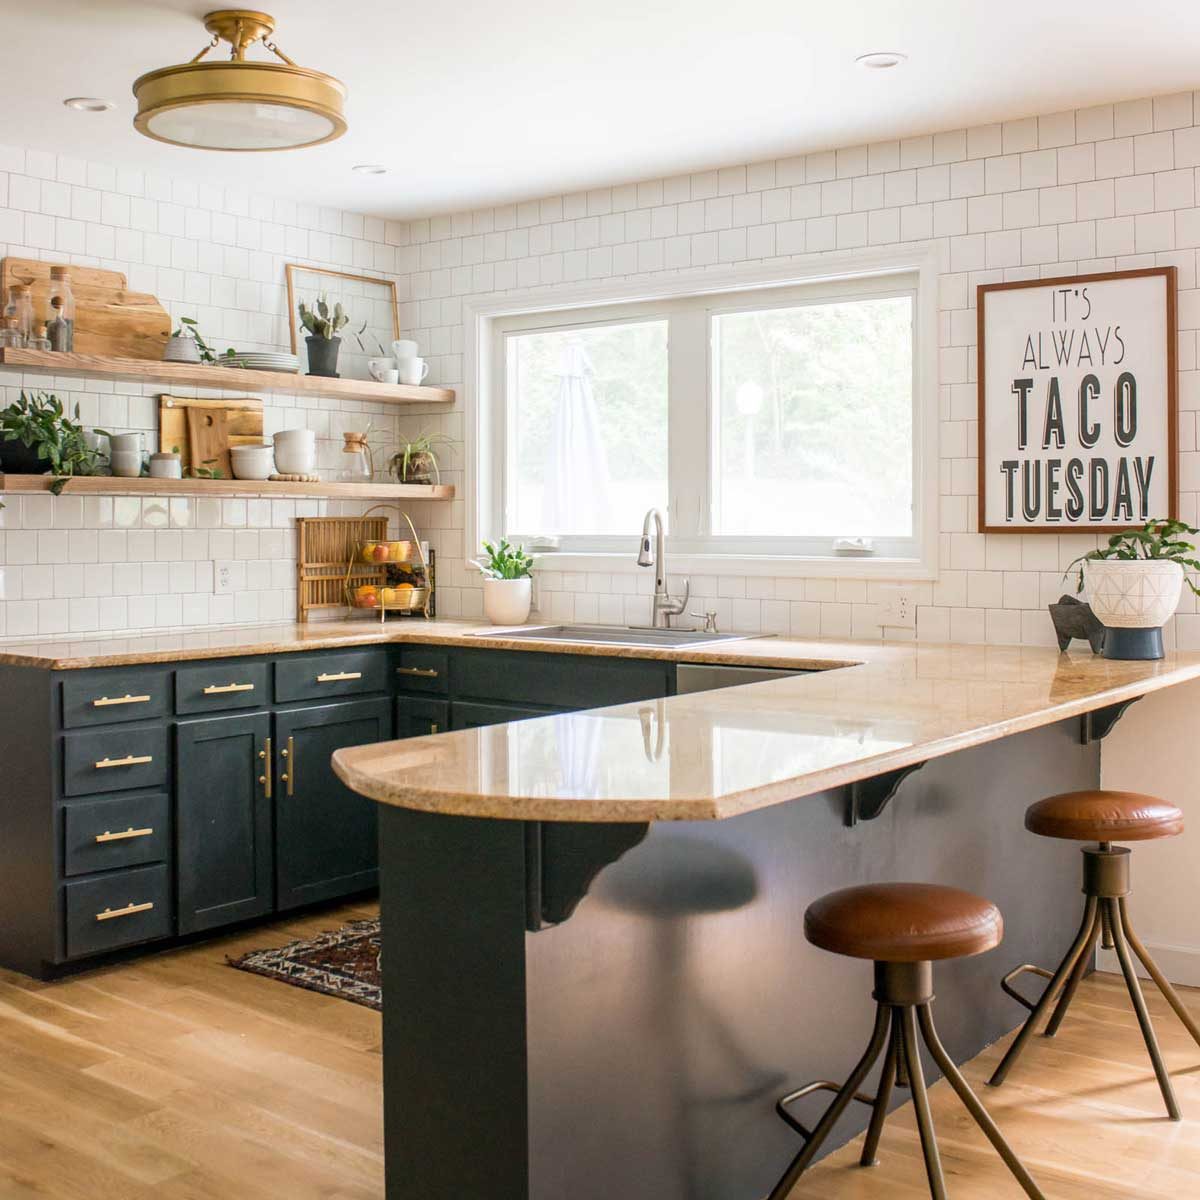 11 Modern Kitchen Ideas You'll Want to Steal - Bob Vila